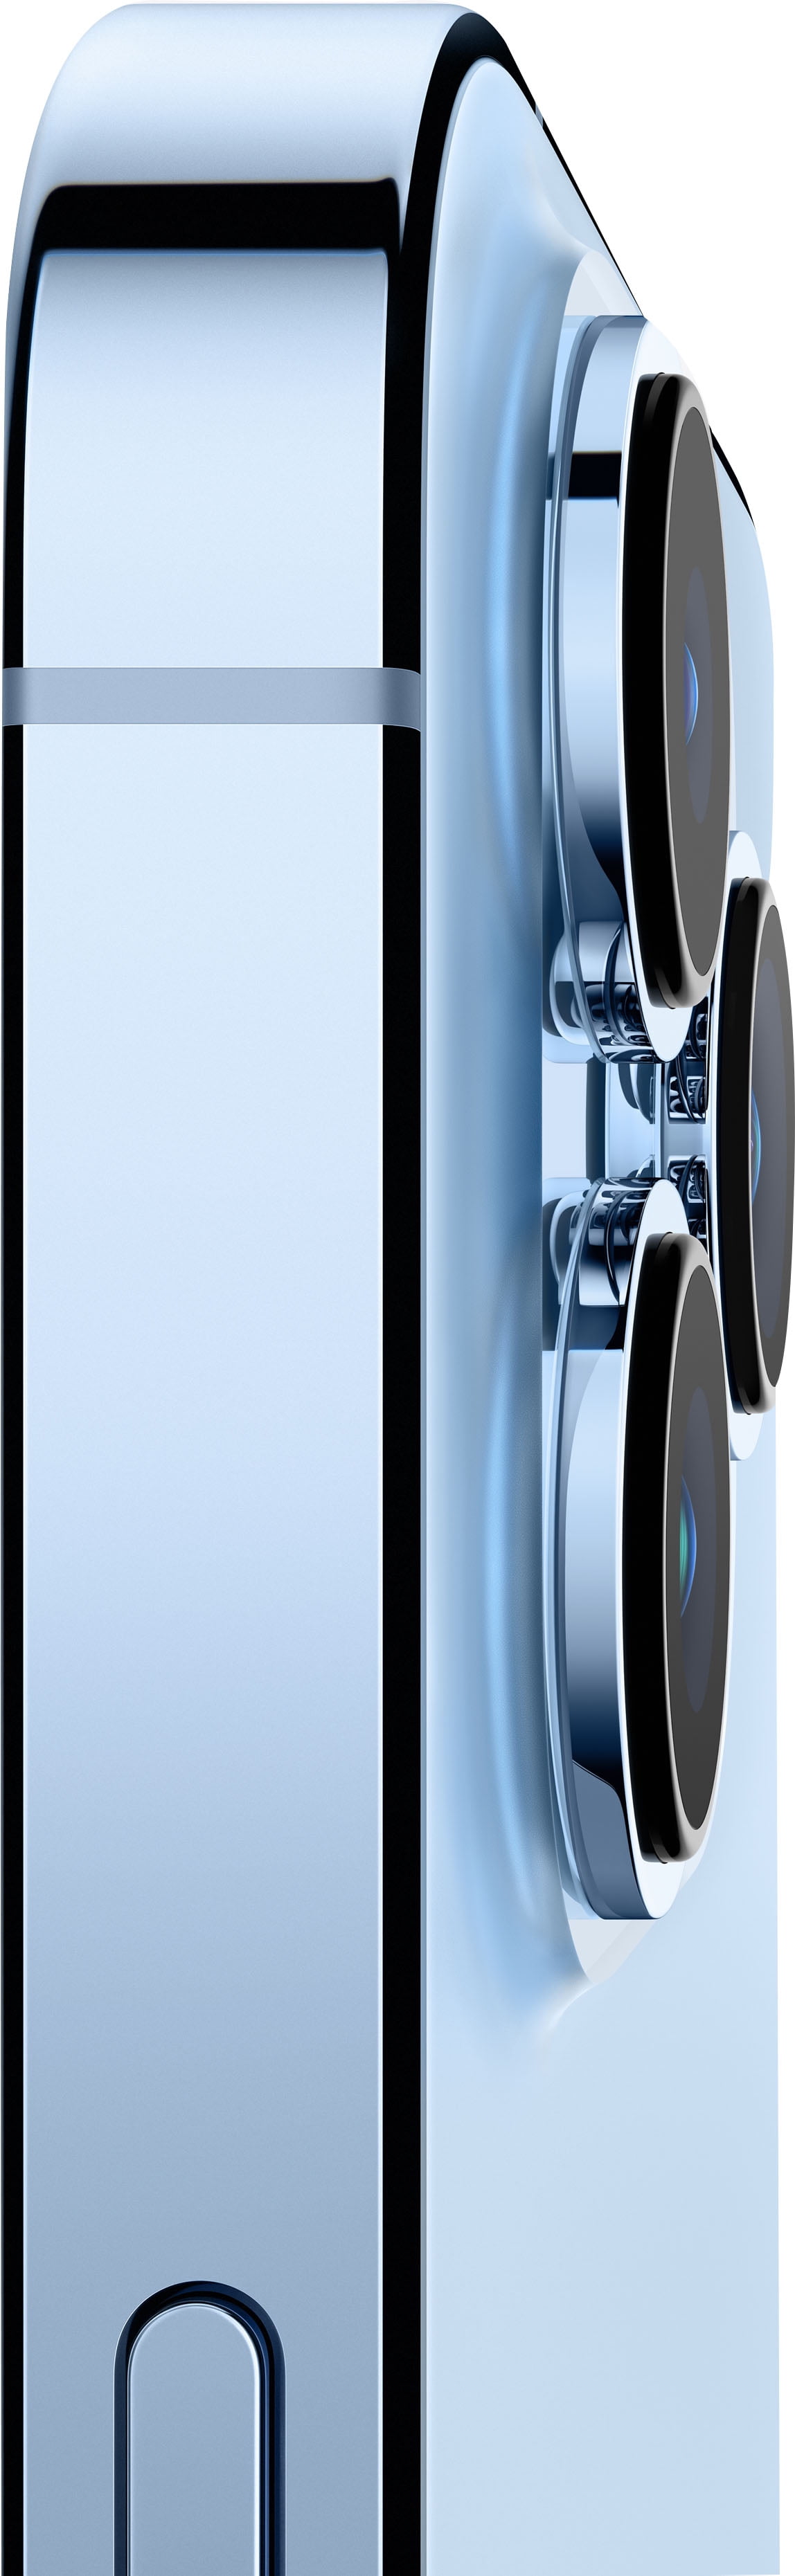 Refurbished iPhone 13 Pro Max 256GB - Sierra Blue (Unlocked) - Apple